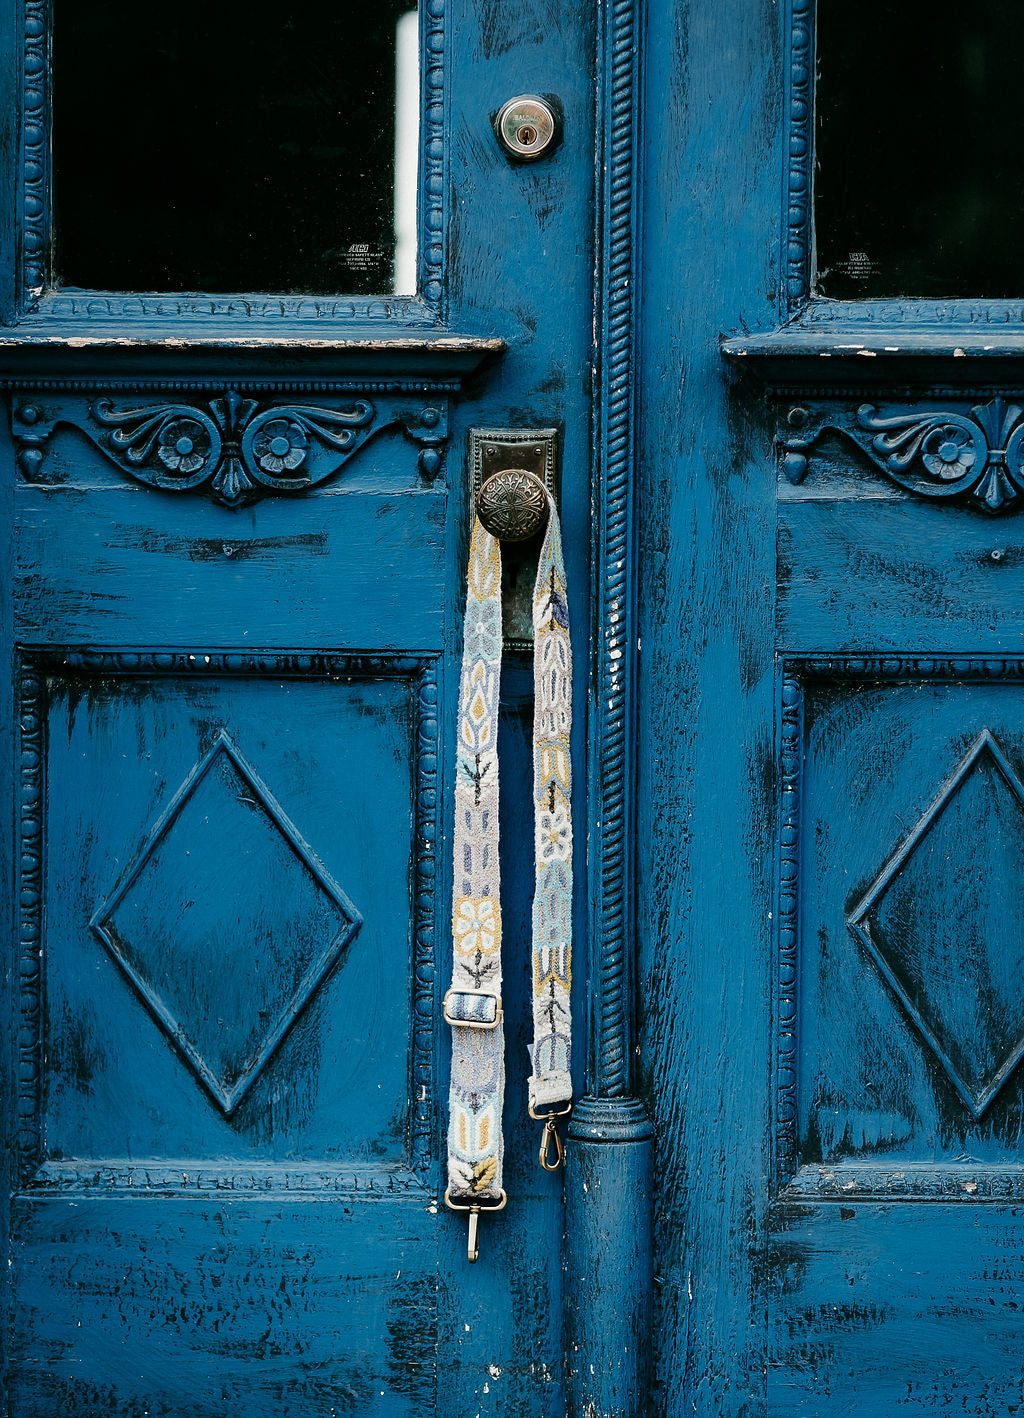 The Yellow Adjustable Purse Strap hanging on doorknob of an antique blue door